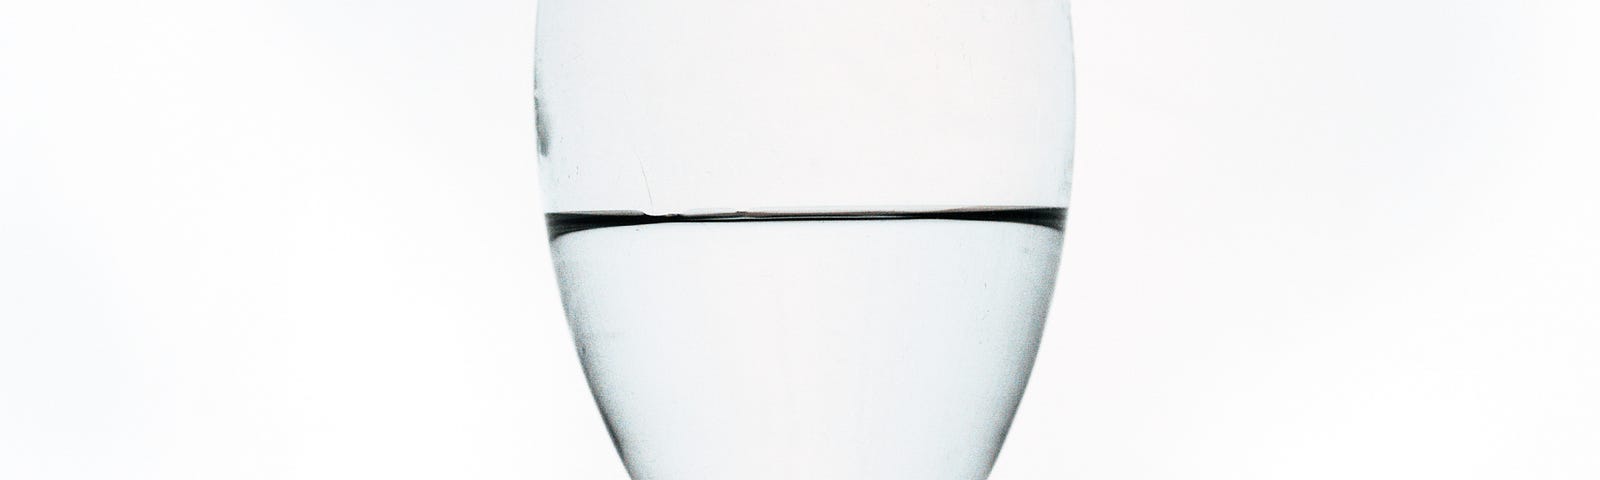 glass half empty, photo of a glass, a monoku